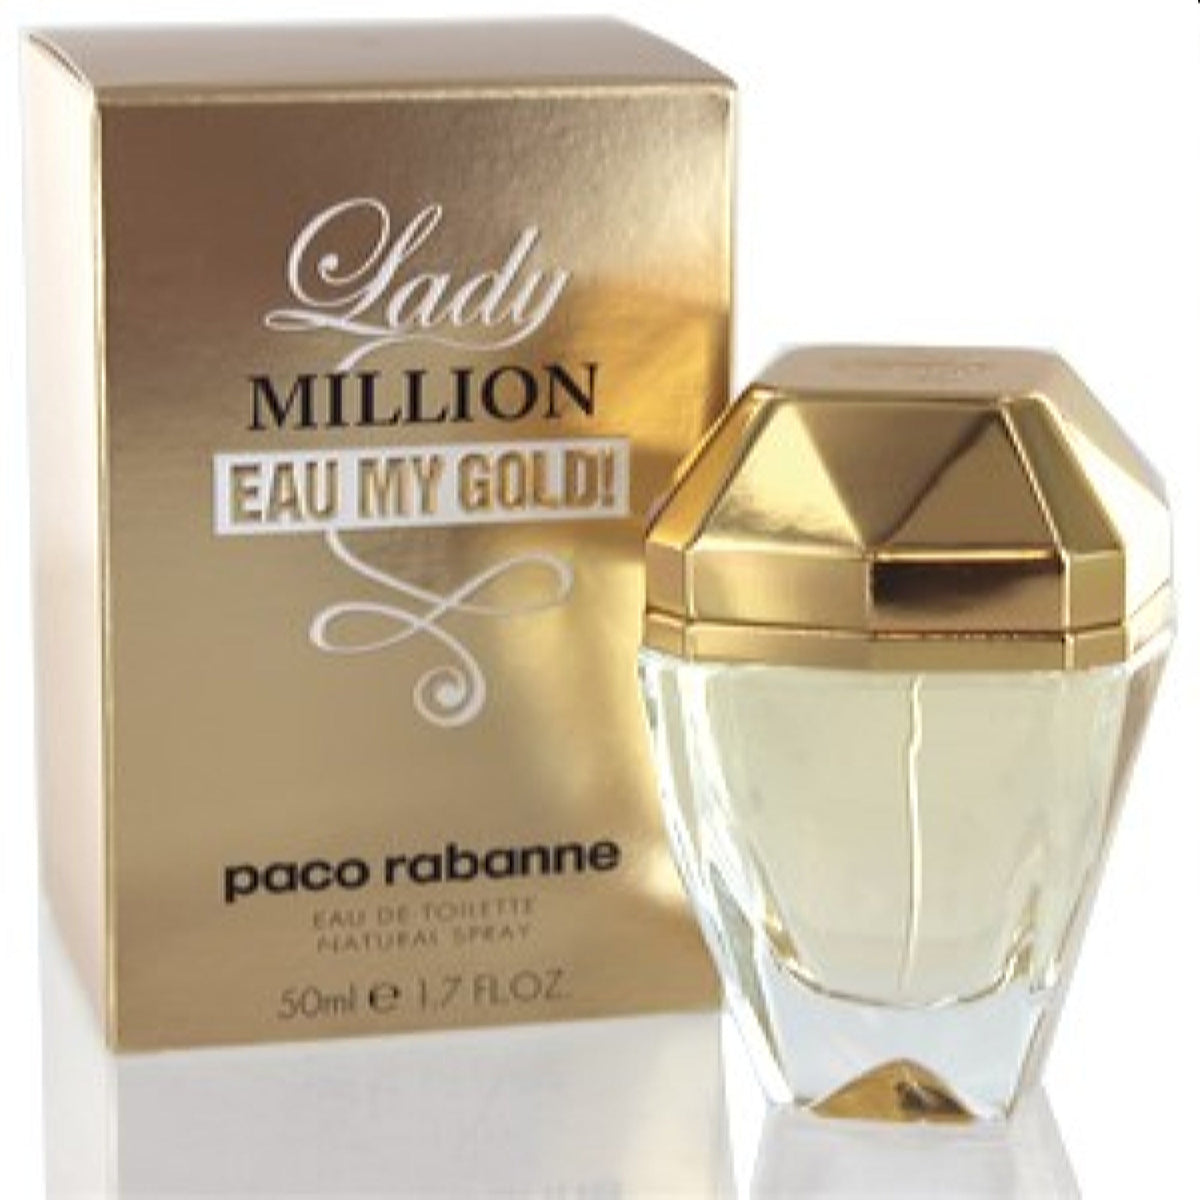 Lady Million Eau My Gold Paco Rabanne Edt Spray 1.7 Oz (50 Ml) For Women  65085916